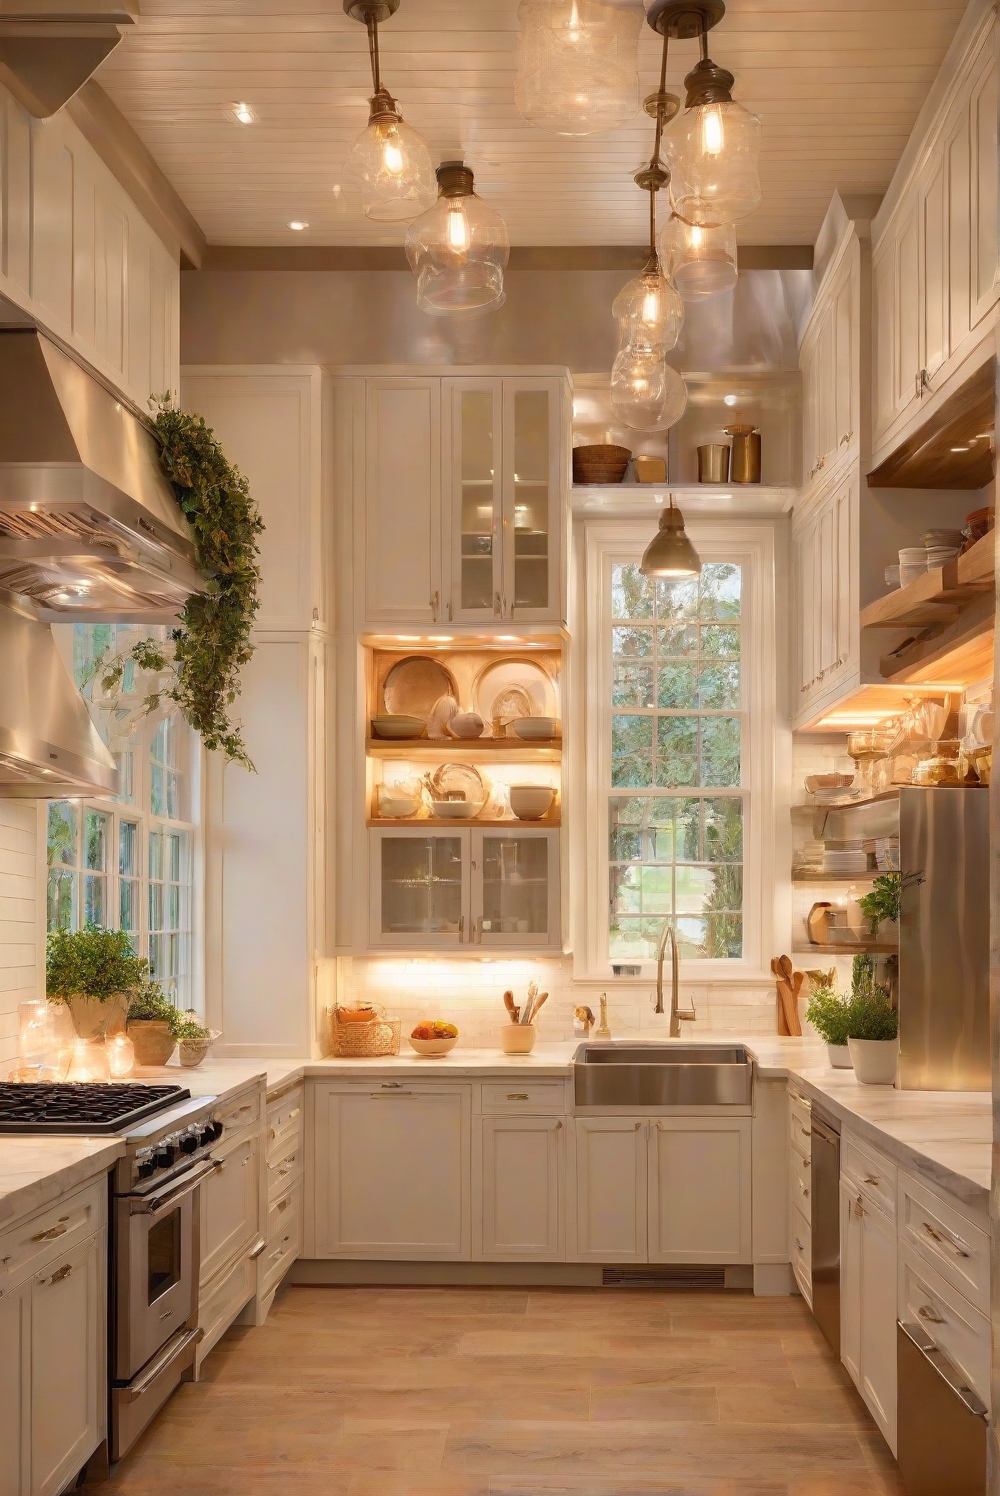 kitchen lighting, kitchen remodels, kitchen renovation, kitchen flooring, kitchen countertops, kitchen backsplash, kitchen cabinet design